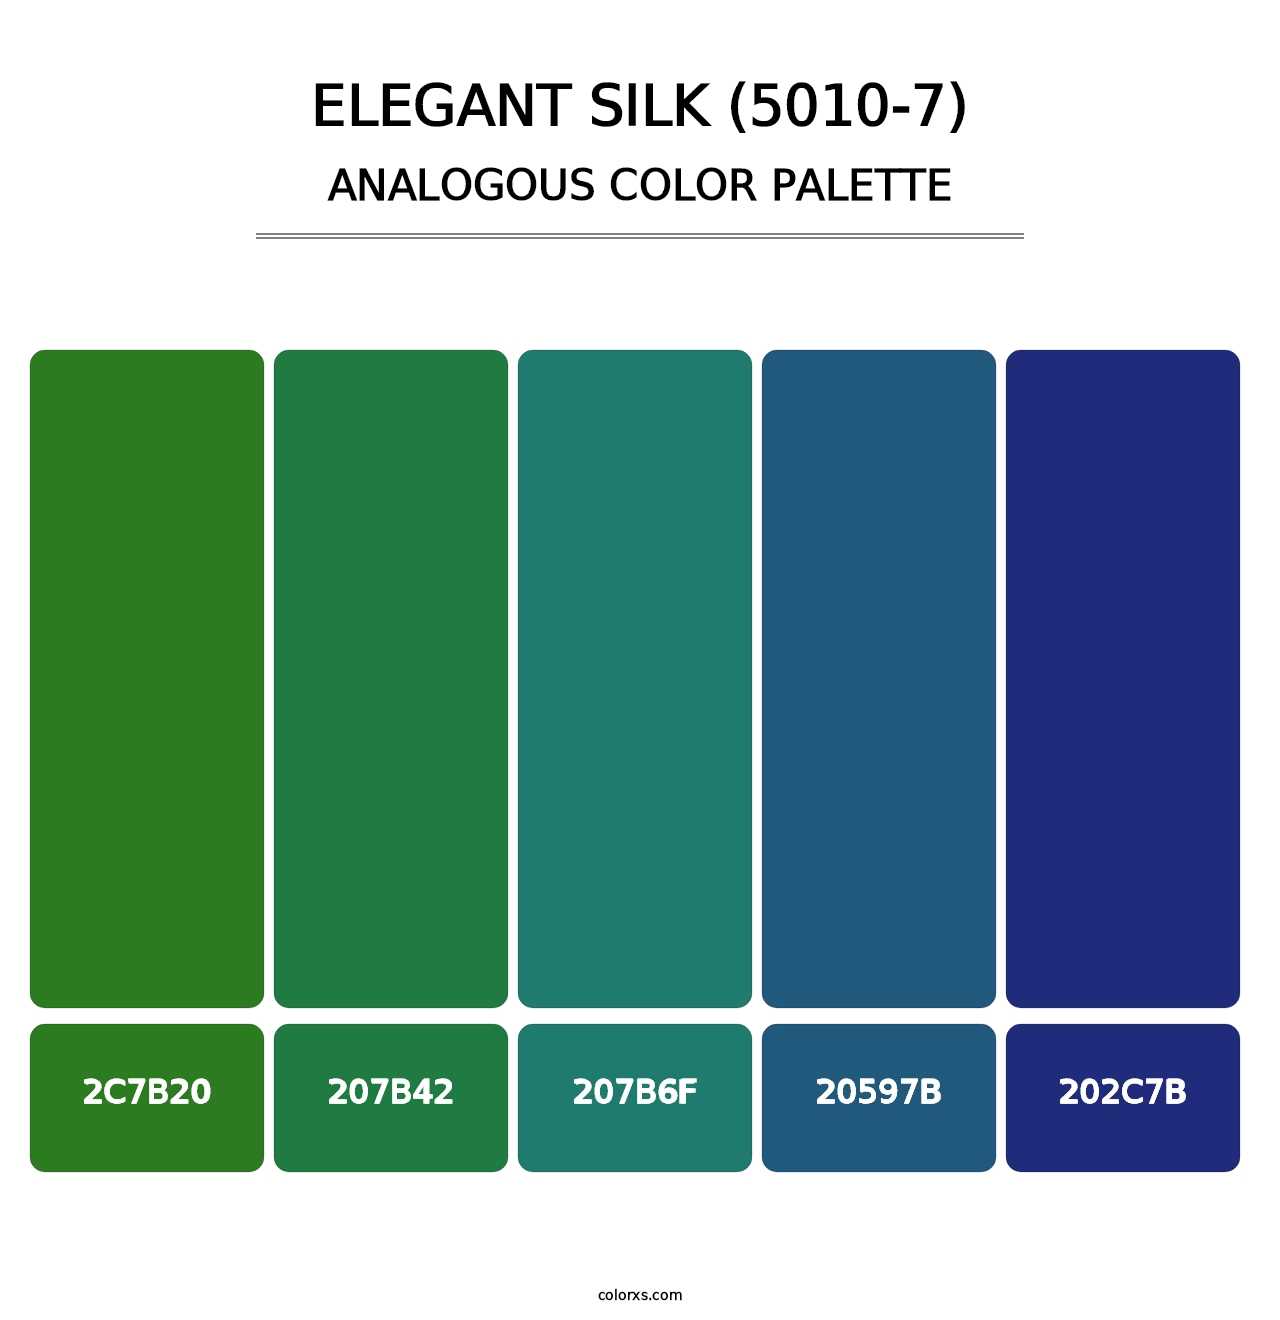 Elegant Silk (5010-7) - Analogous Color Palette